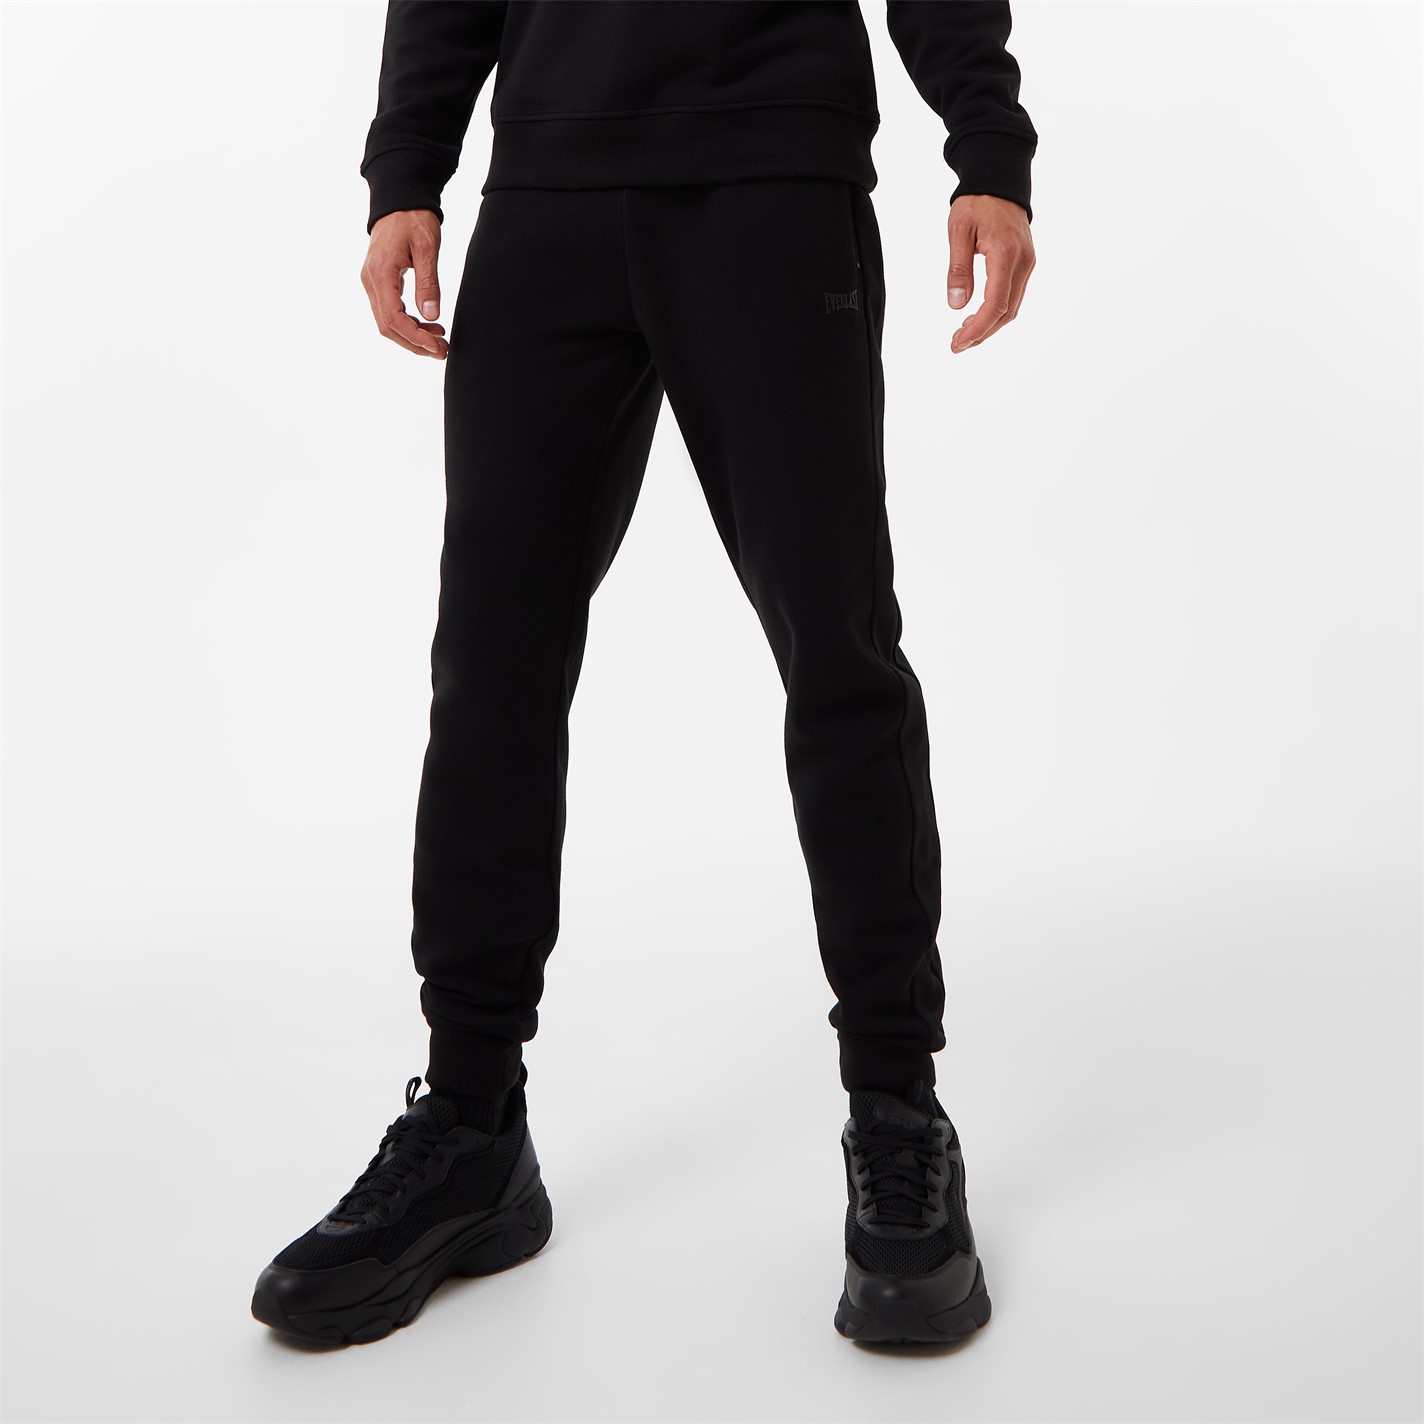 Pantaloni sport cu mansete Everlast Premium negru